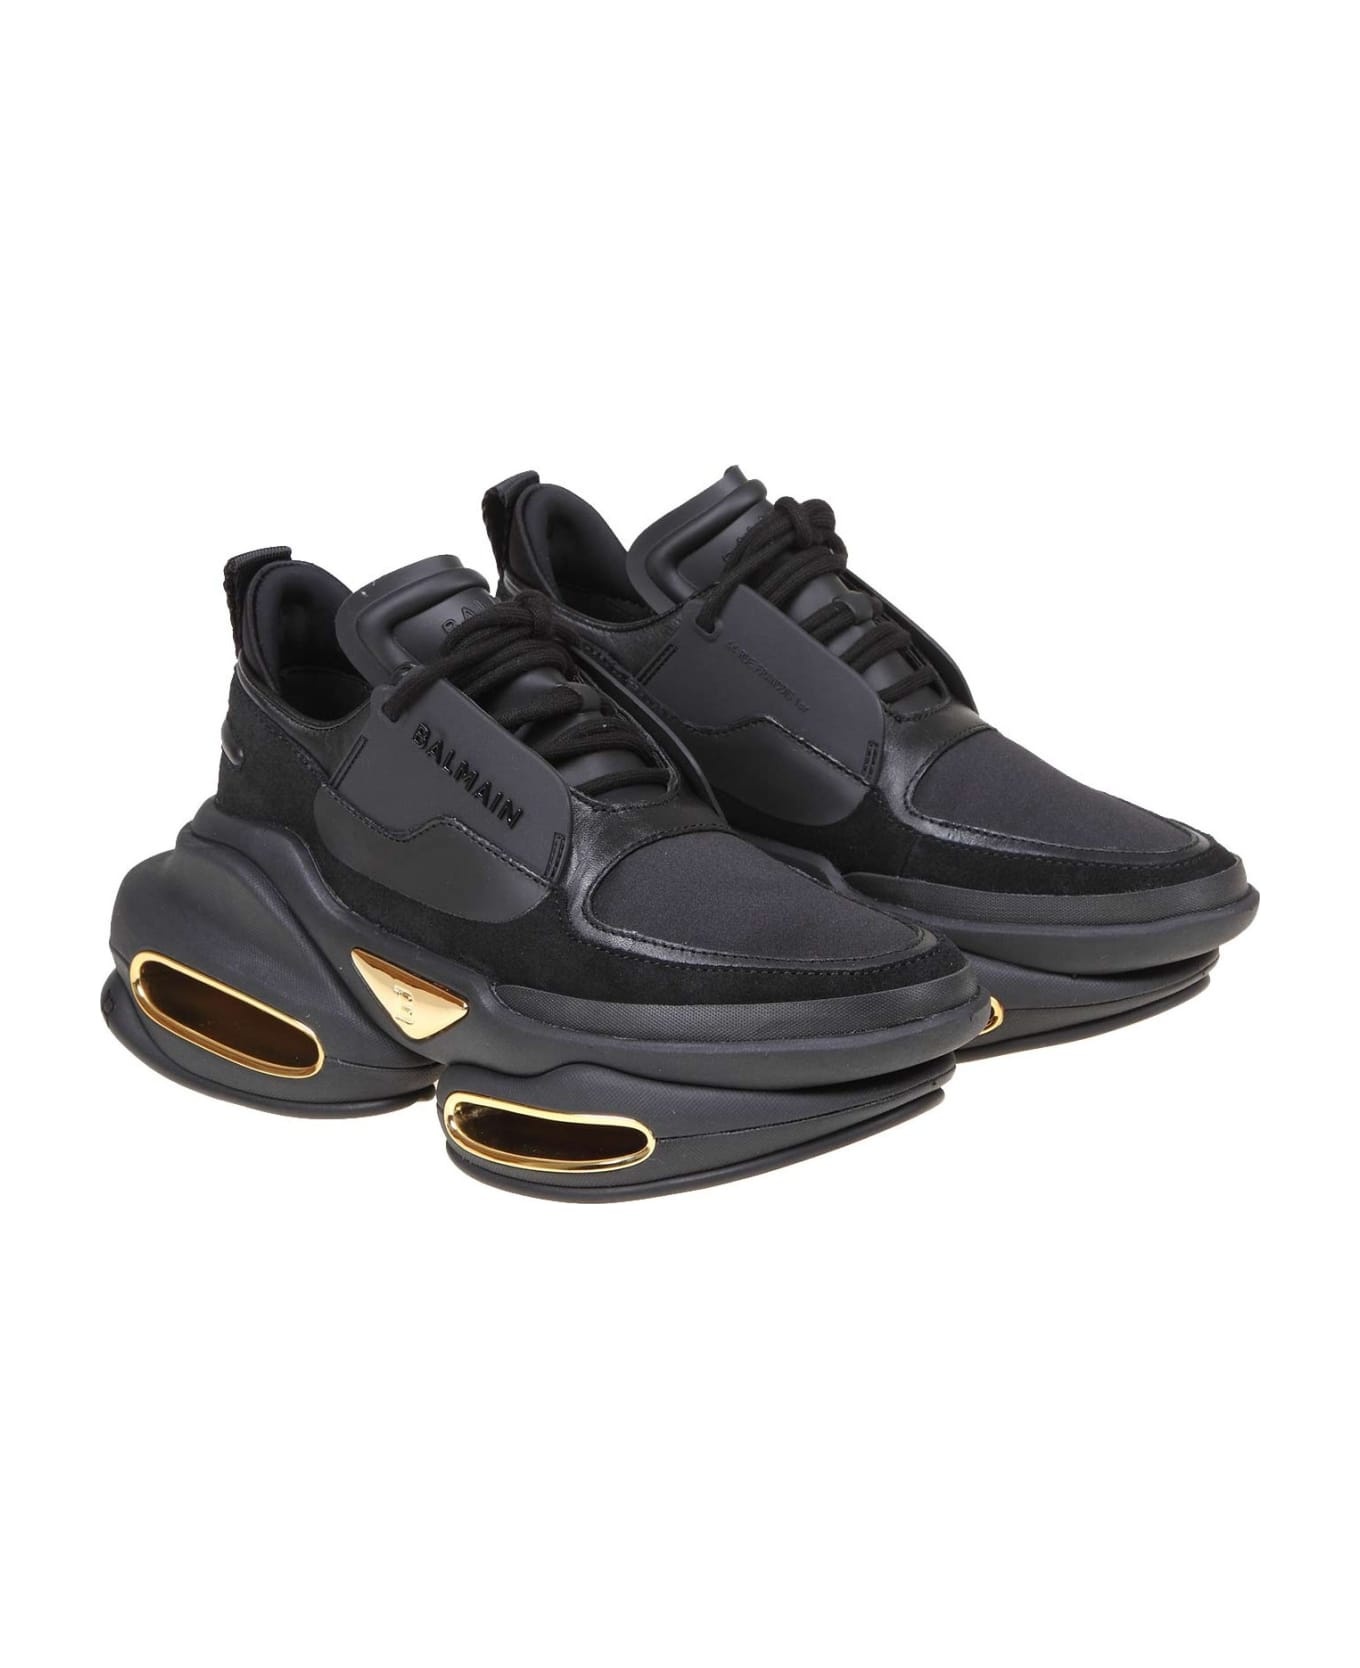 Balmain B-bold Sneakers In Black Leather And Fabric - 2